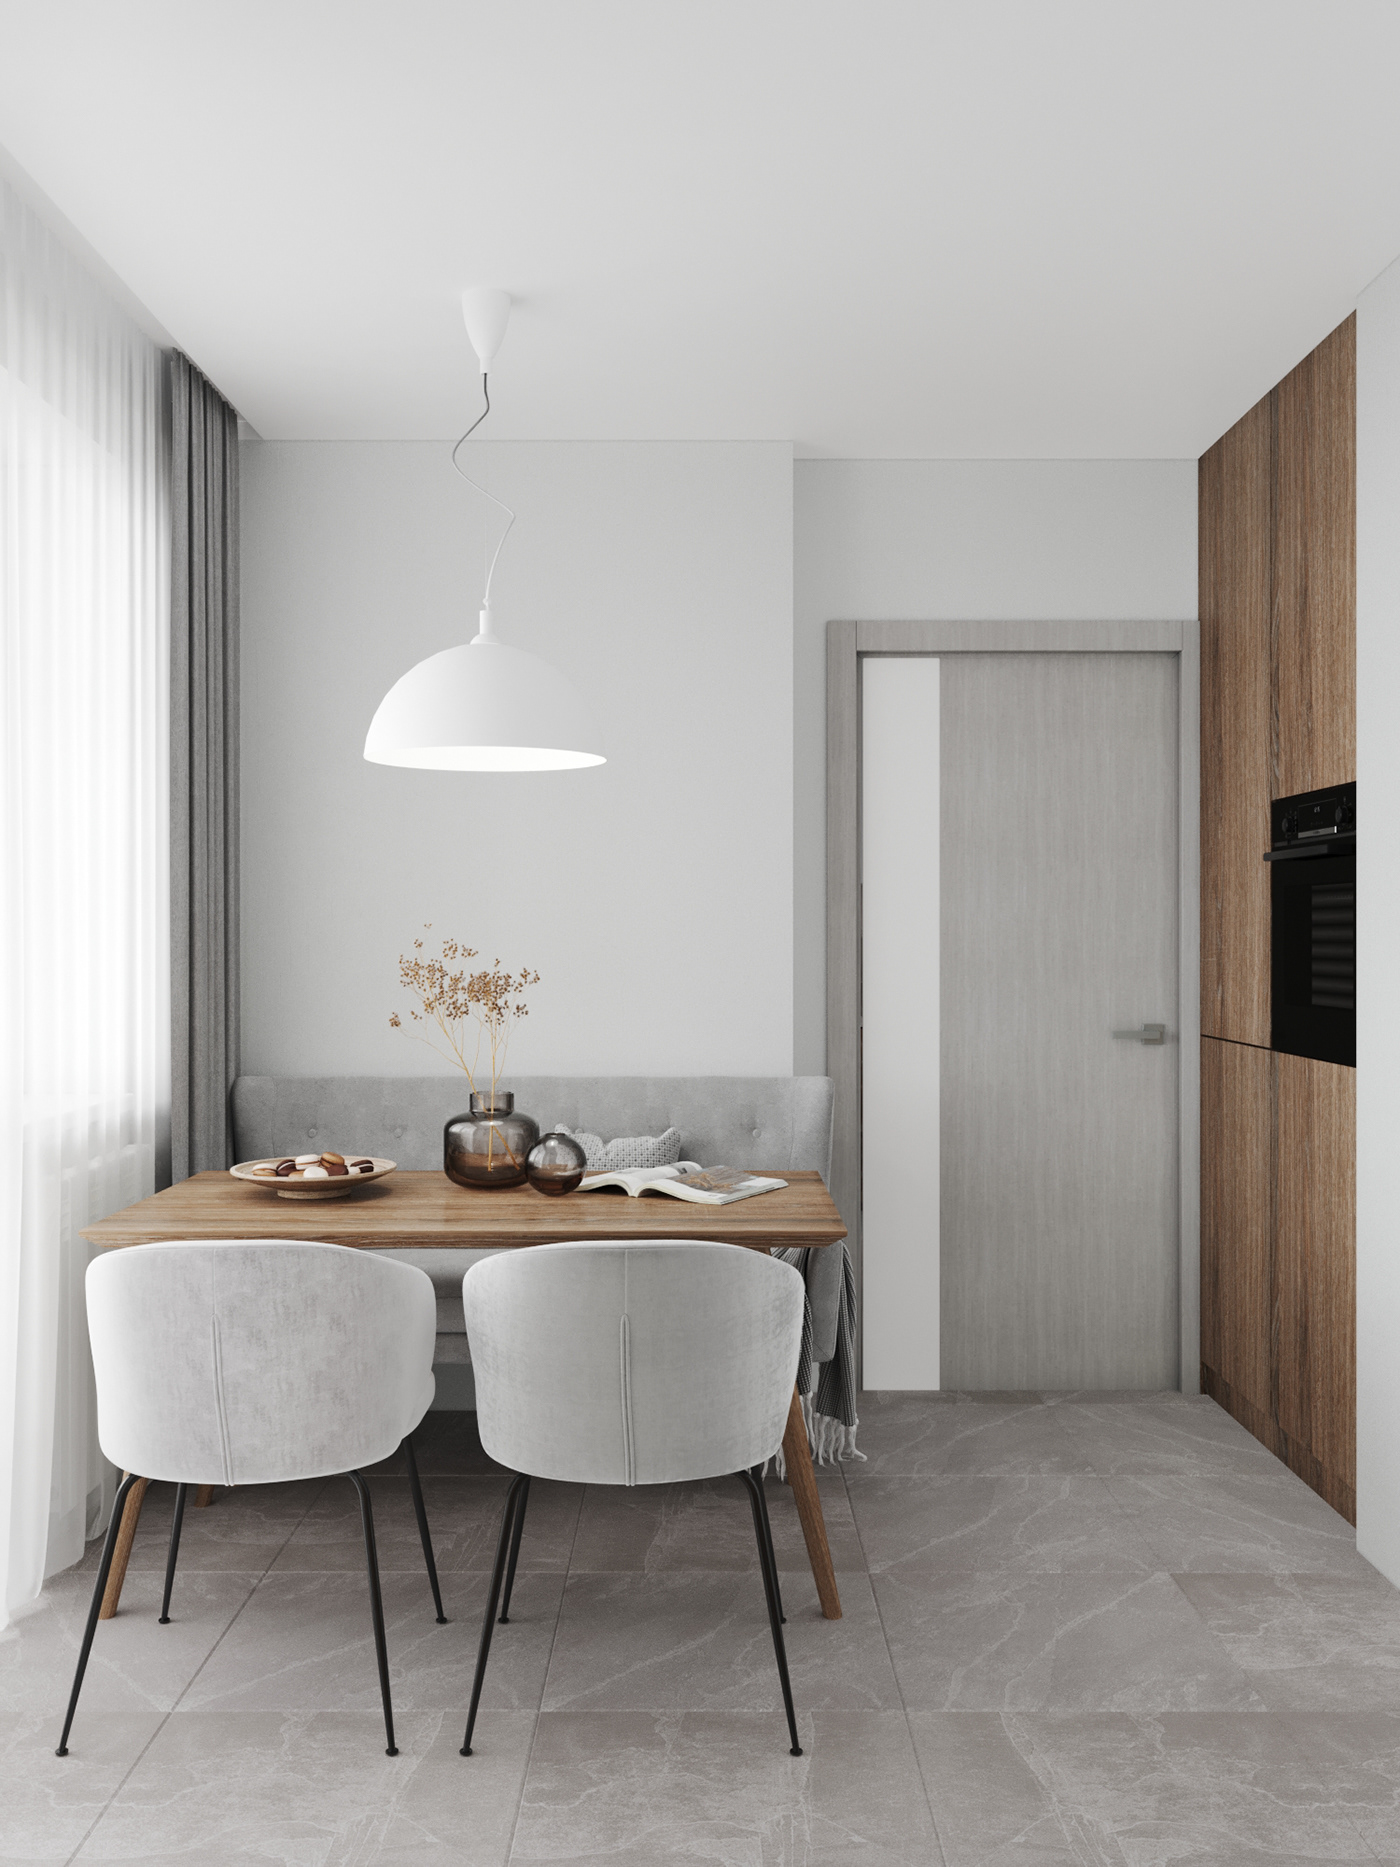 3dmax 3ds max corona render  greykitchen interior design  kitchen kitchen design KitchenVisualization Render visualization